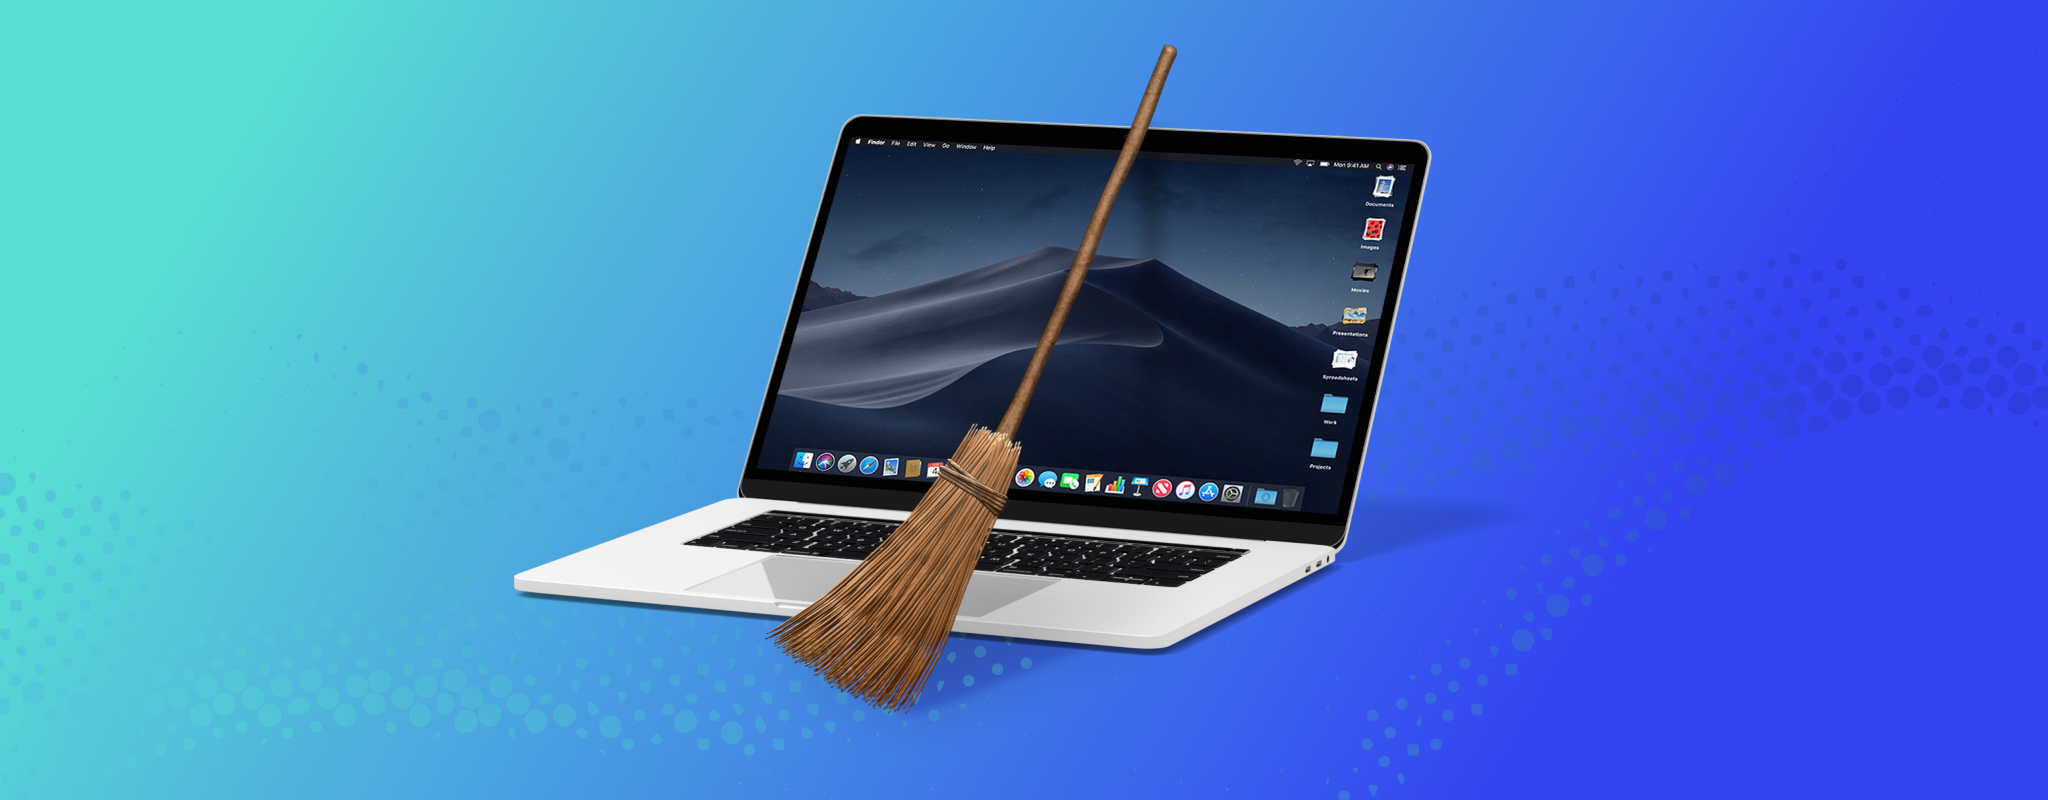 delete advanced mac cleaner